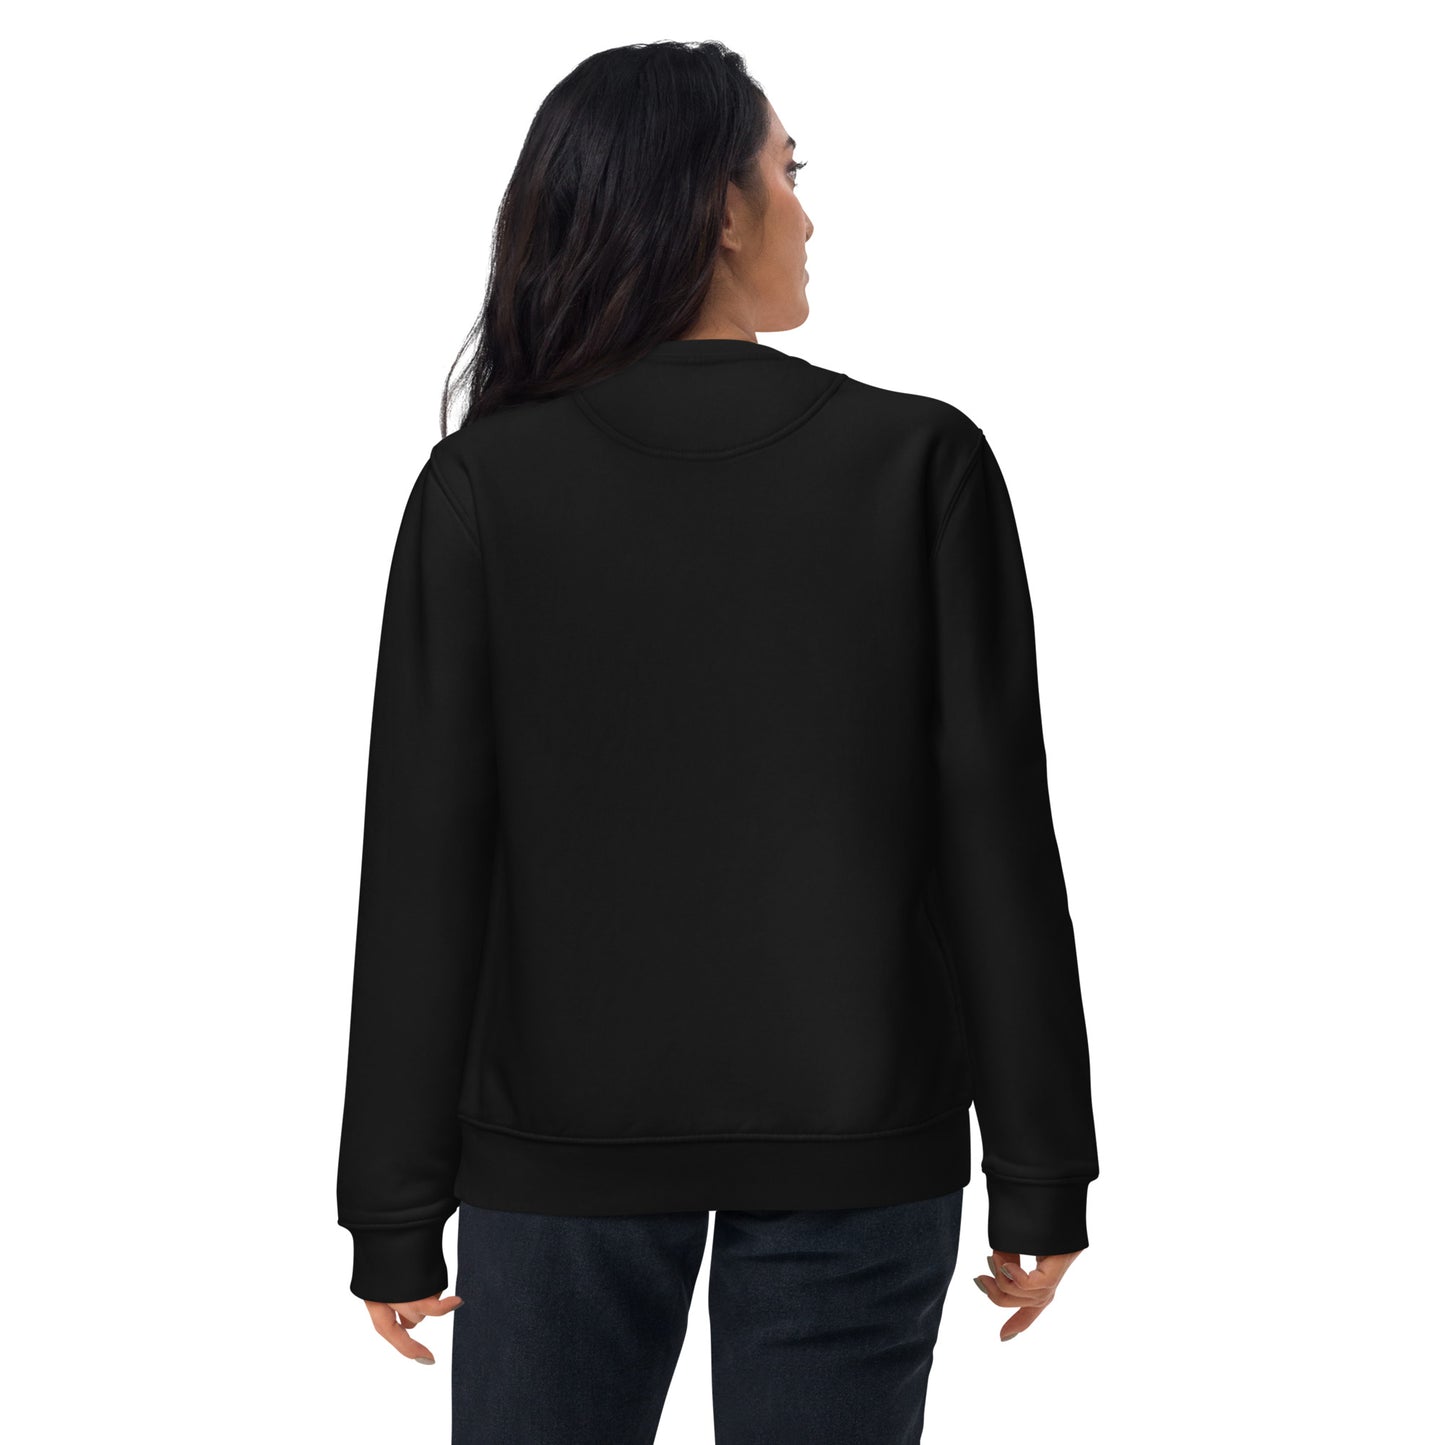 FE019.2 - Unisex Bio-Pullover - Sweater - Sweatshirt - Woman Life Freedom 2 - Jin Jiyan Azadi - white logo